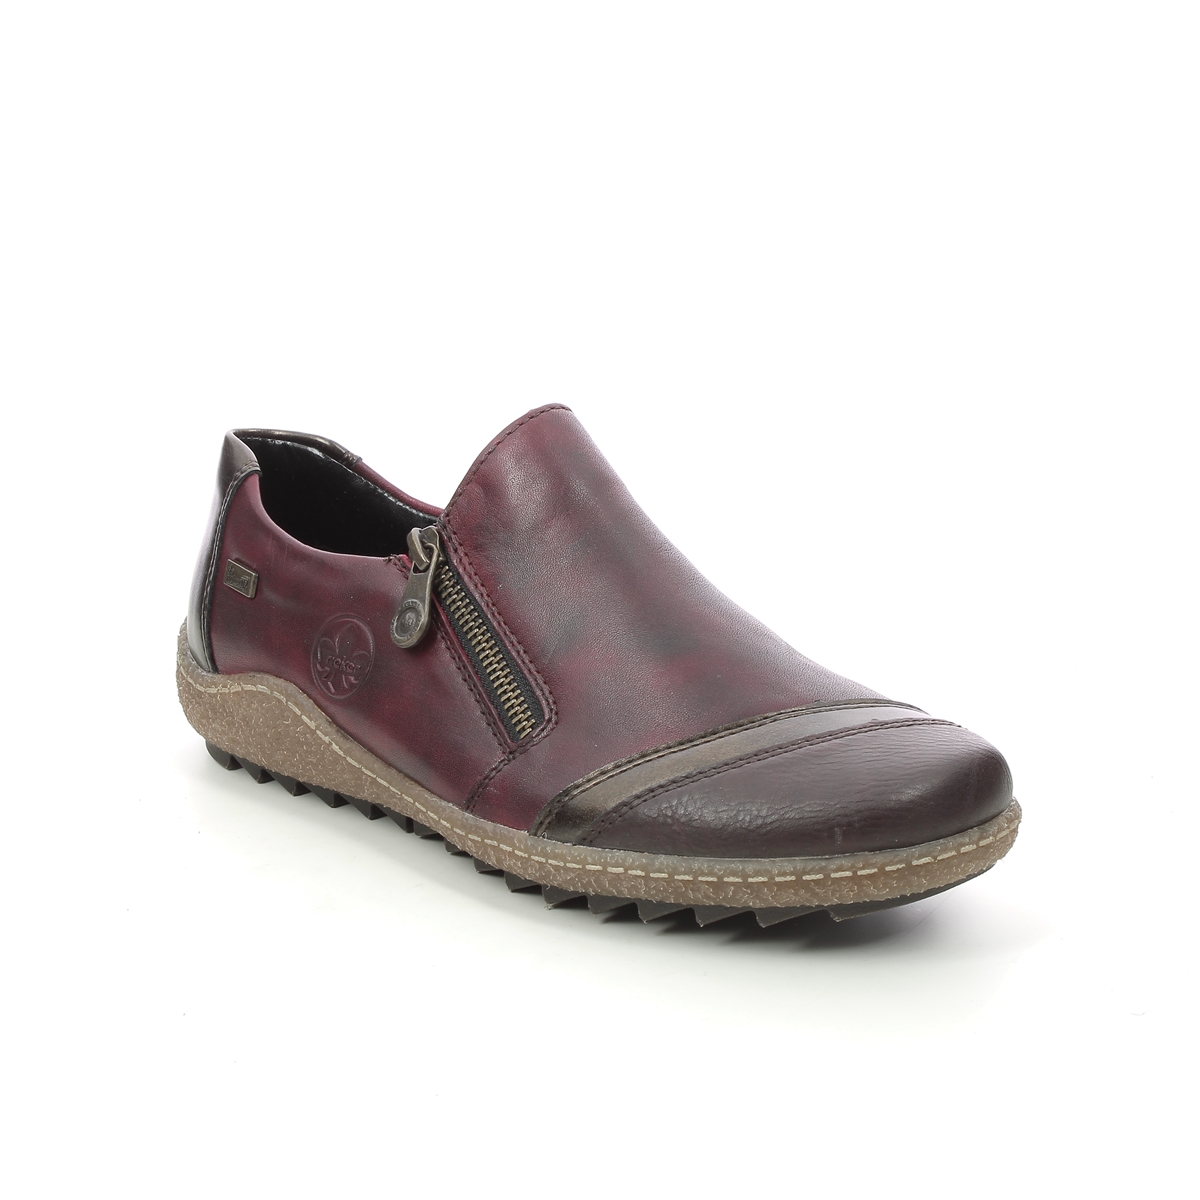 Rieker Zigshu Tex Brown Wine Womens Comfort Slip On Shoes L7571-25 In Size 39 In Plain Brown Wine